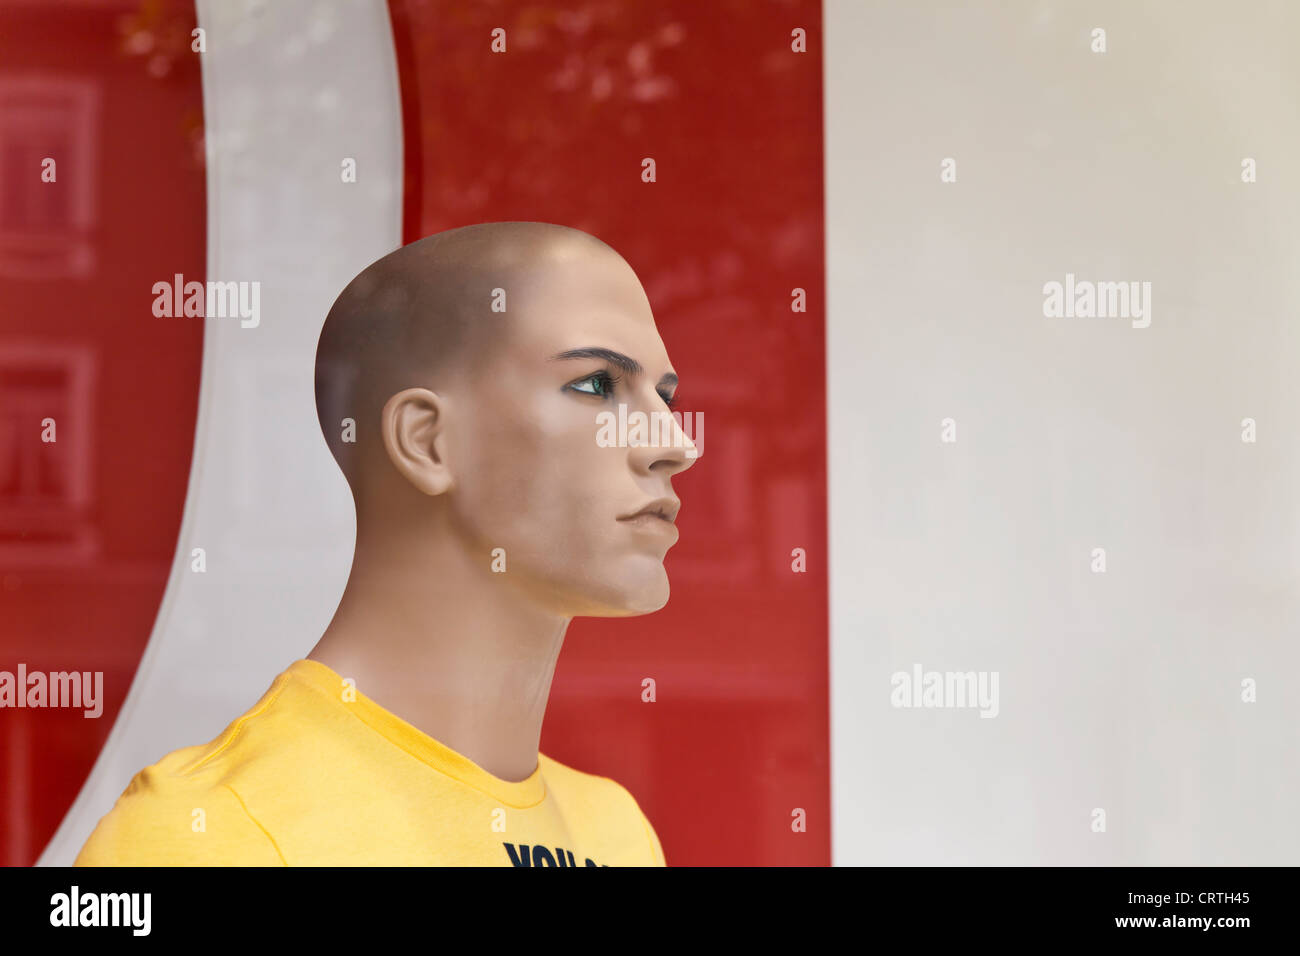 Portrait of a male dummy in window display. Stock Photo